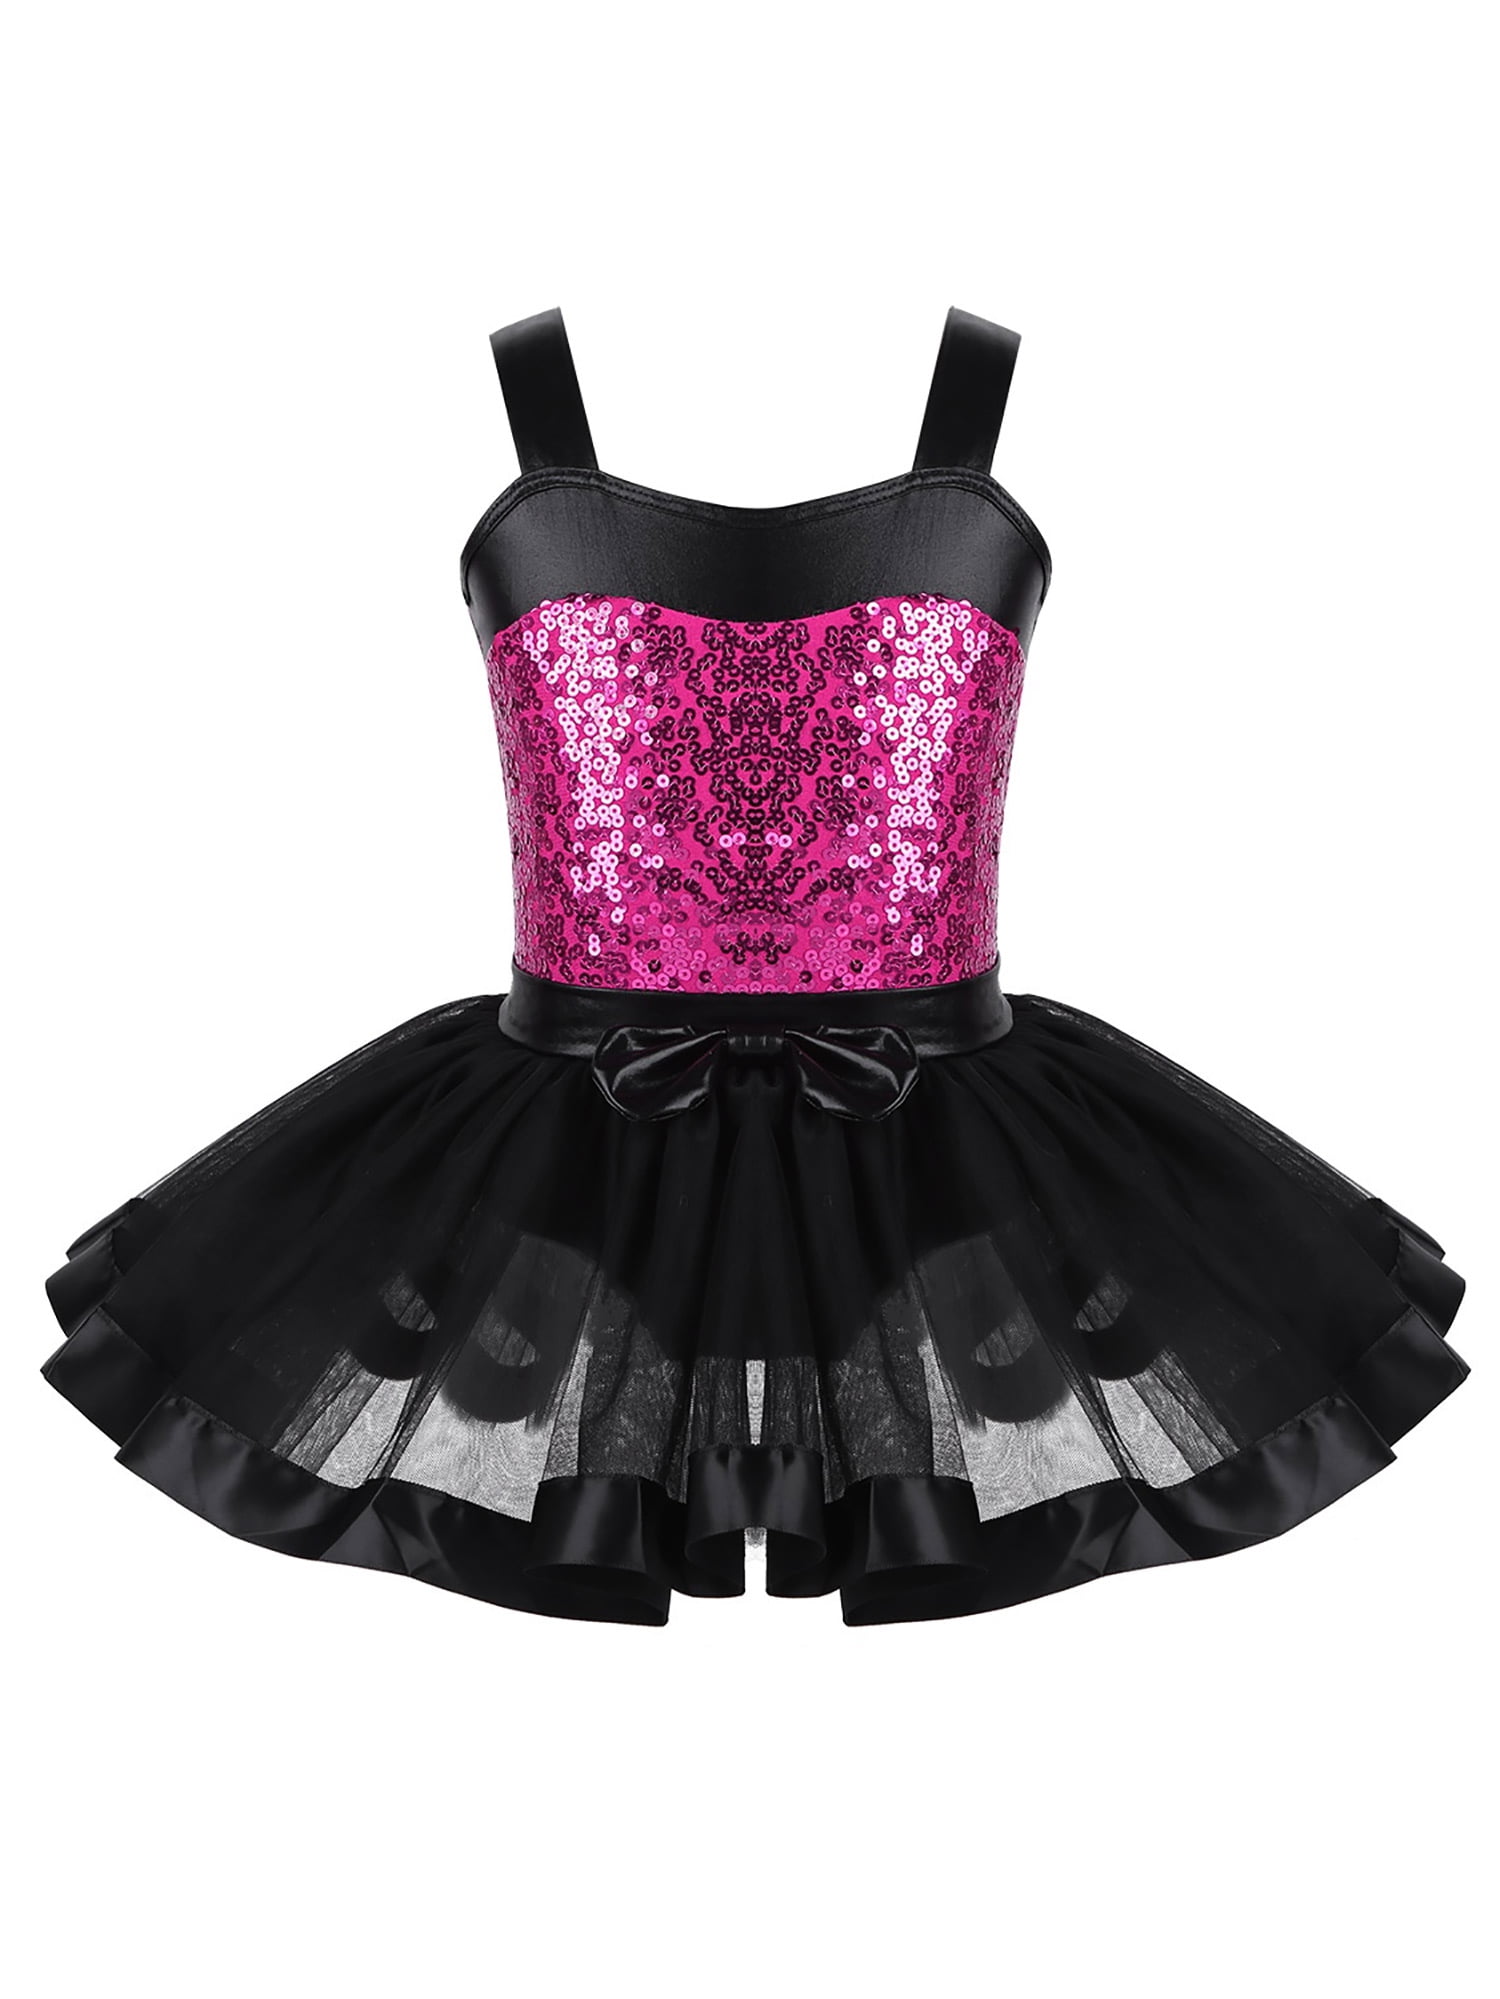 Girls Tutu Skirt Petticoat Dance Sequin Party Latin Jazz Layered Dress Costume 